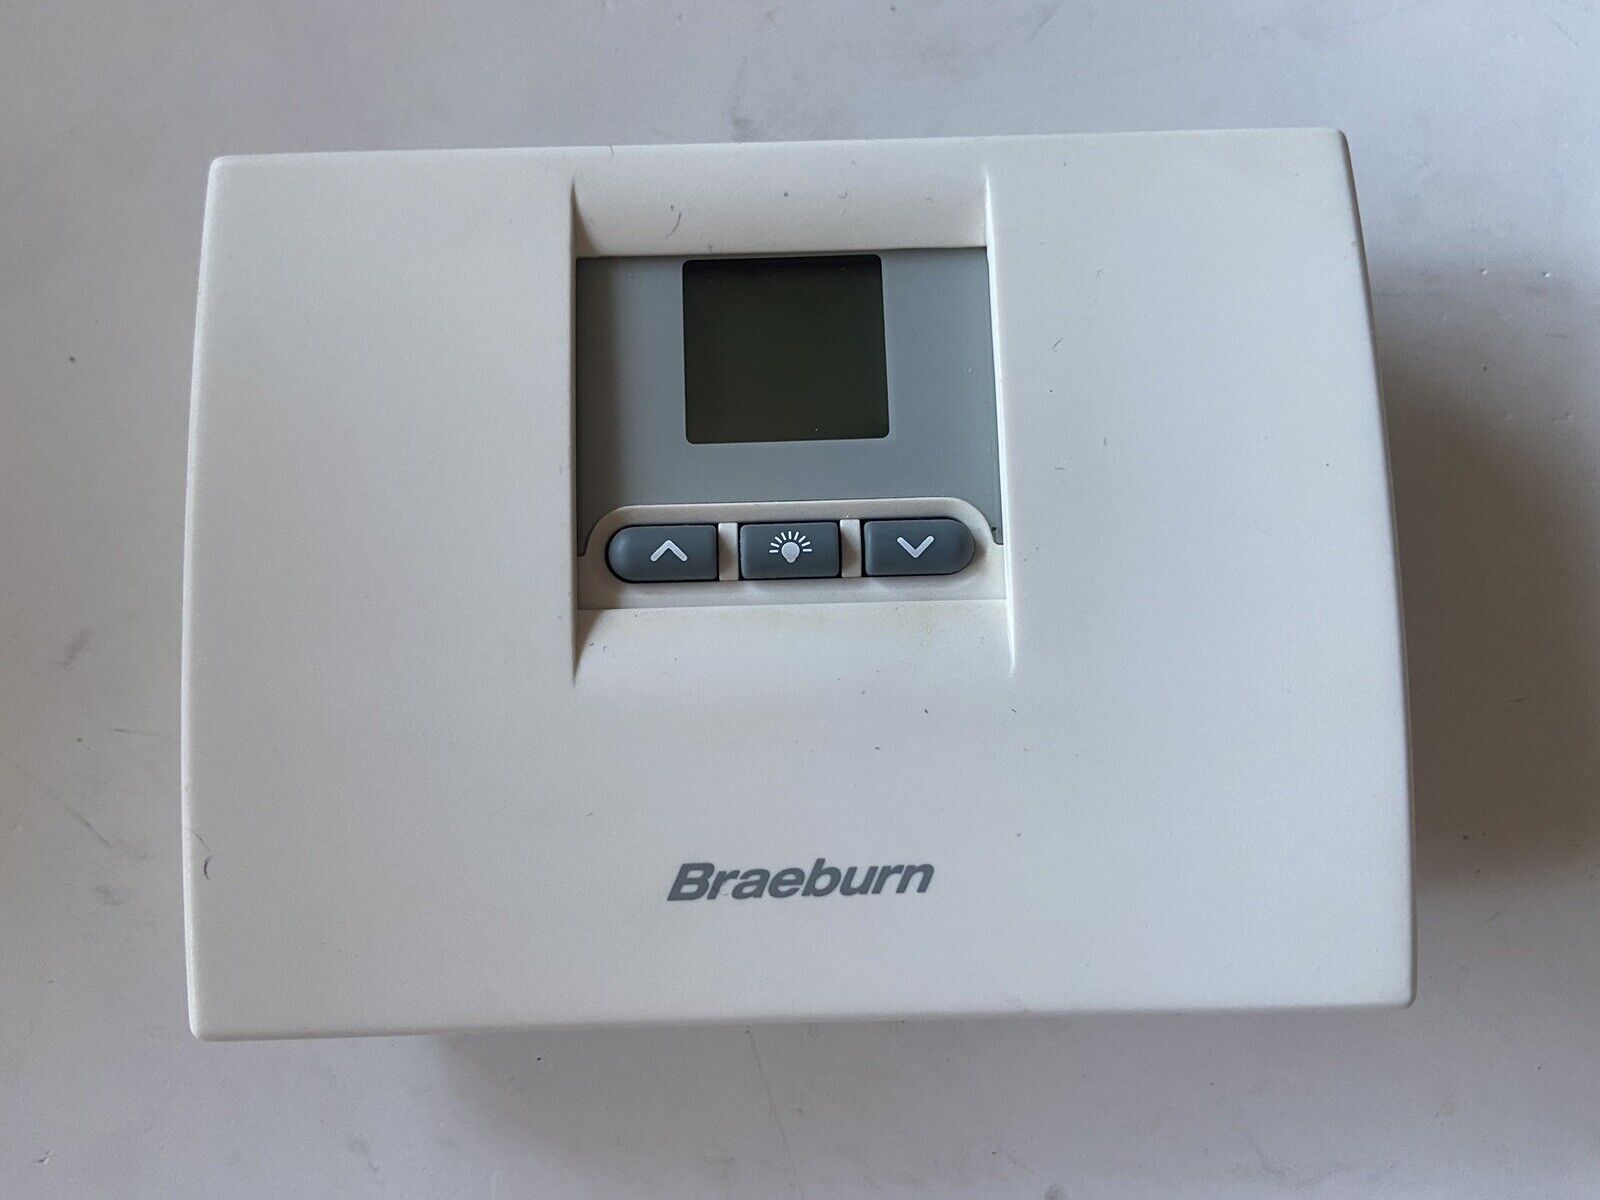 Braeburn Non Programmable Digital Single Stage Heat/Cool Thermostat Model 1000